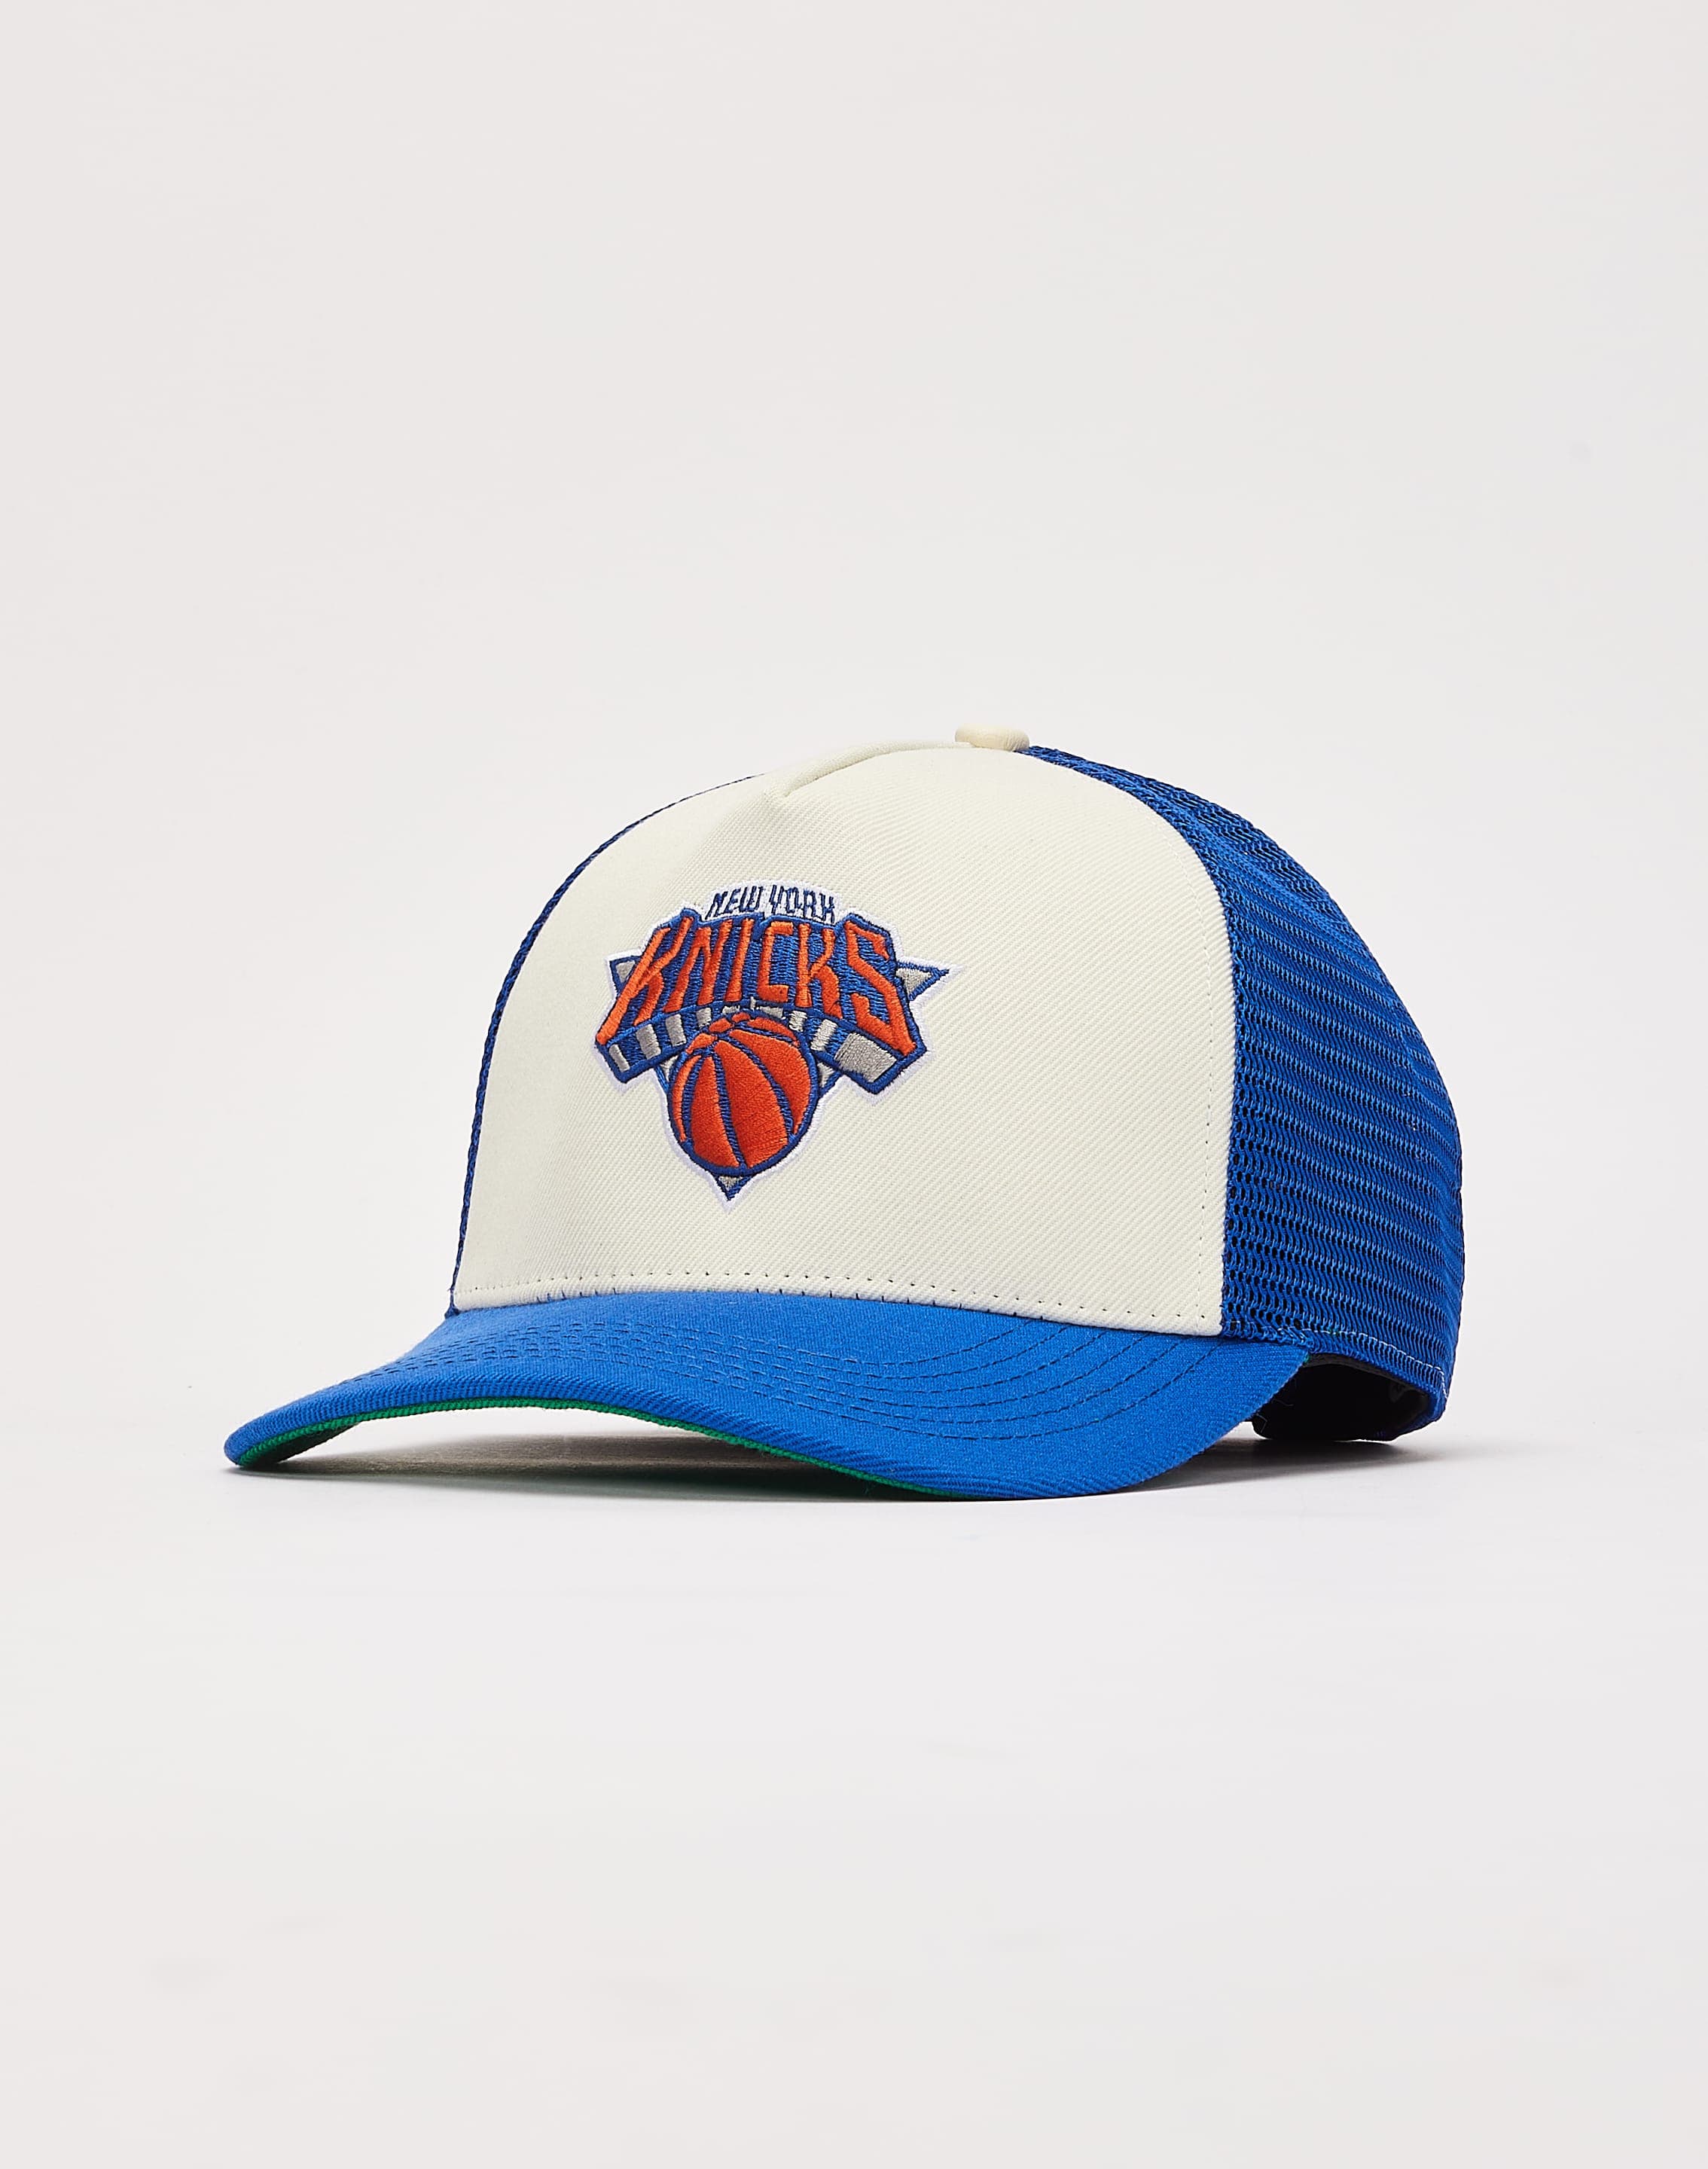 adidas, Accessories, New York Knicks Beanie